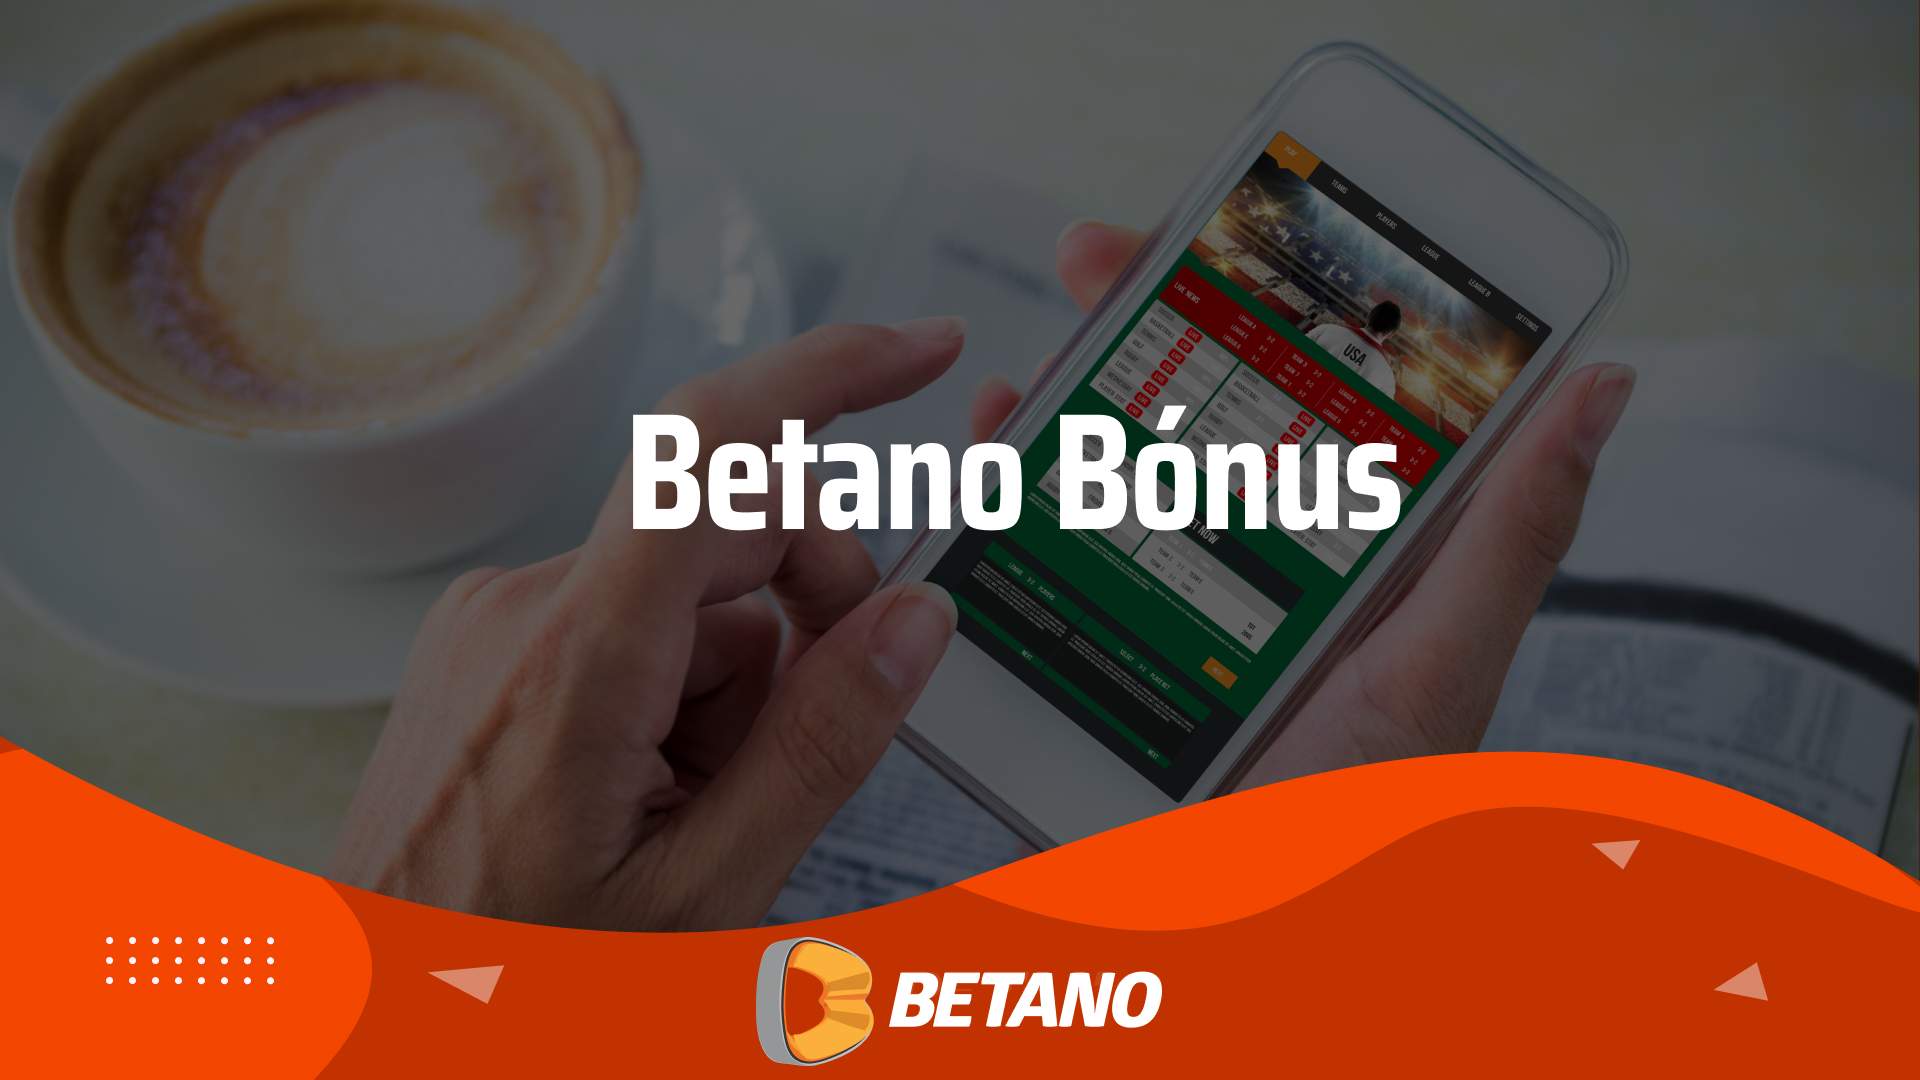 Betano bonus - Betano bónus: 50€ bónus + 10€ freebet com VIVABET